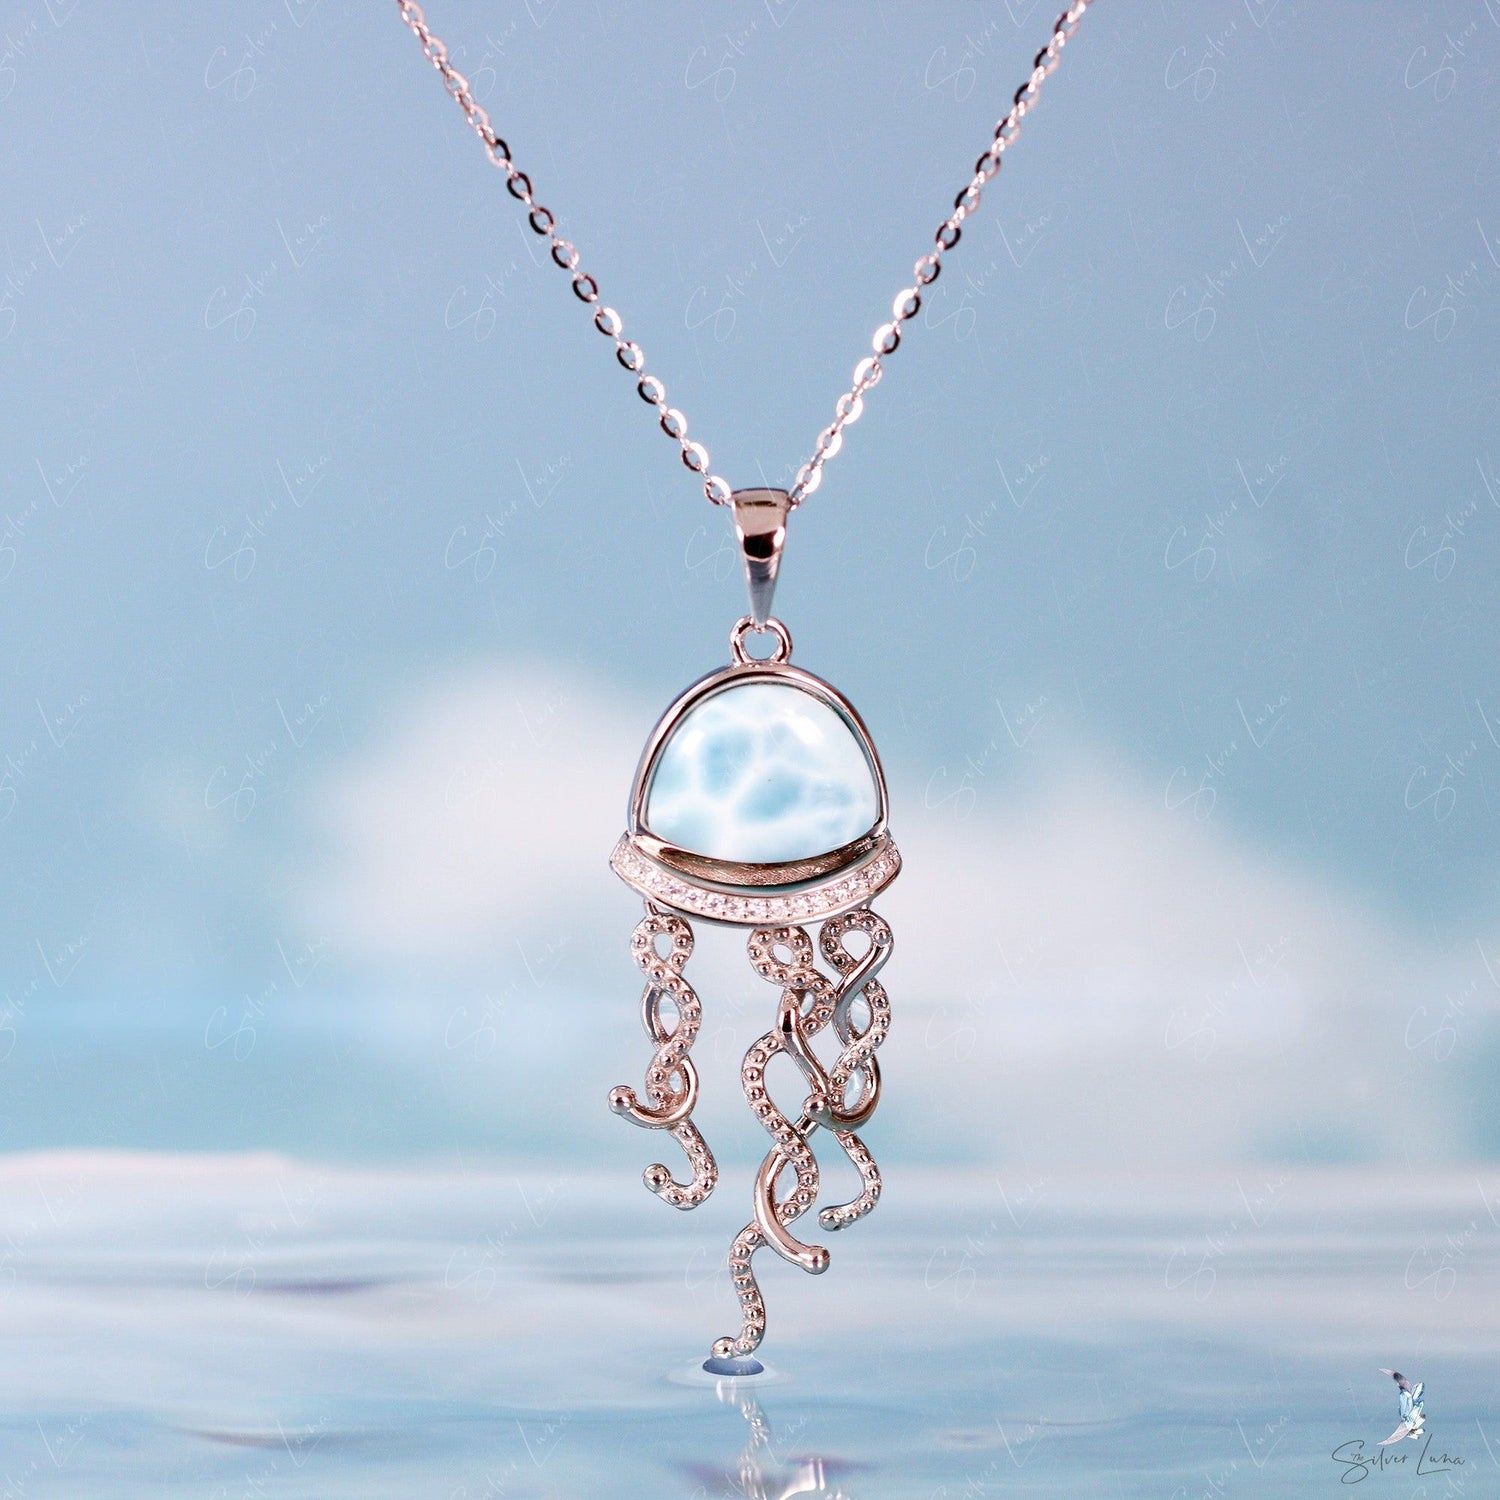 jellyfish Larimar pendant necklace